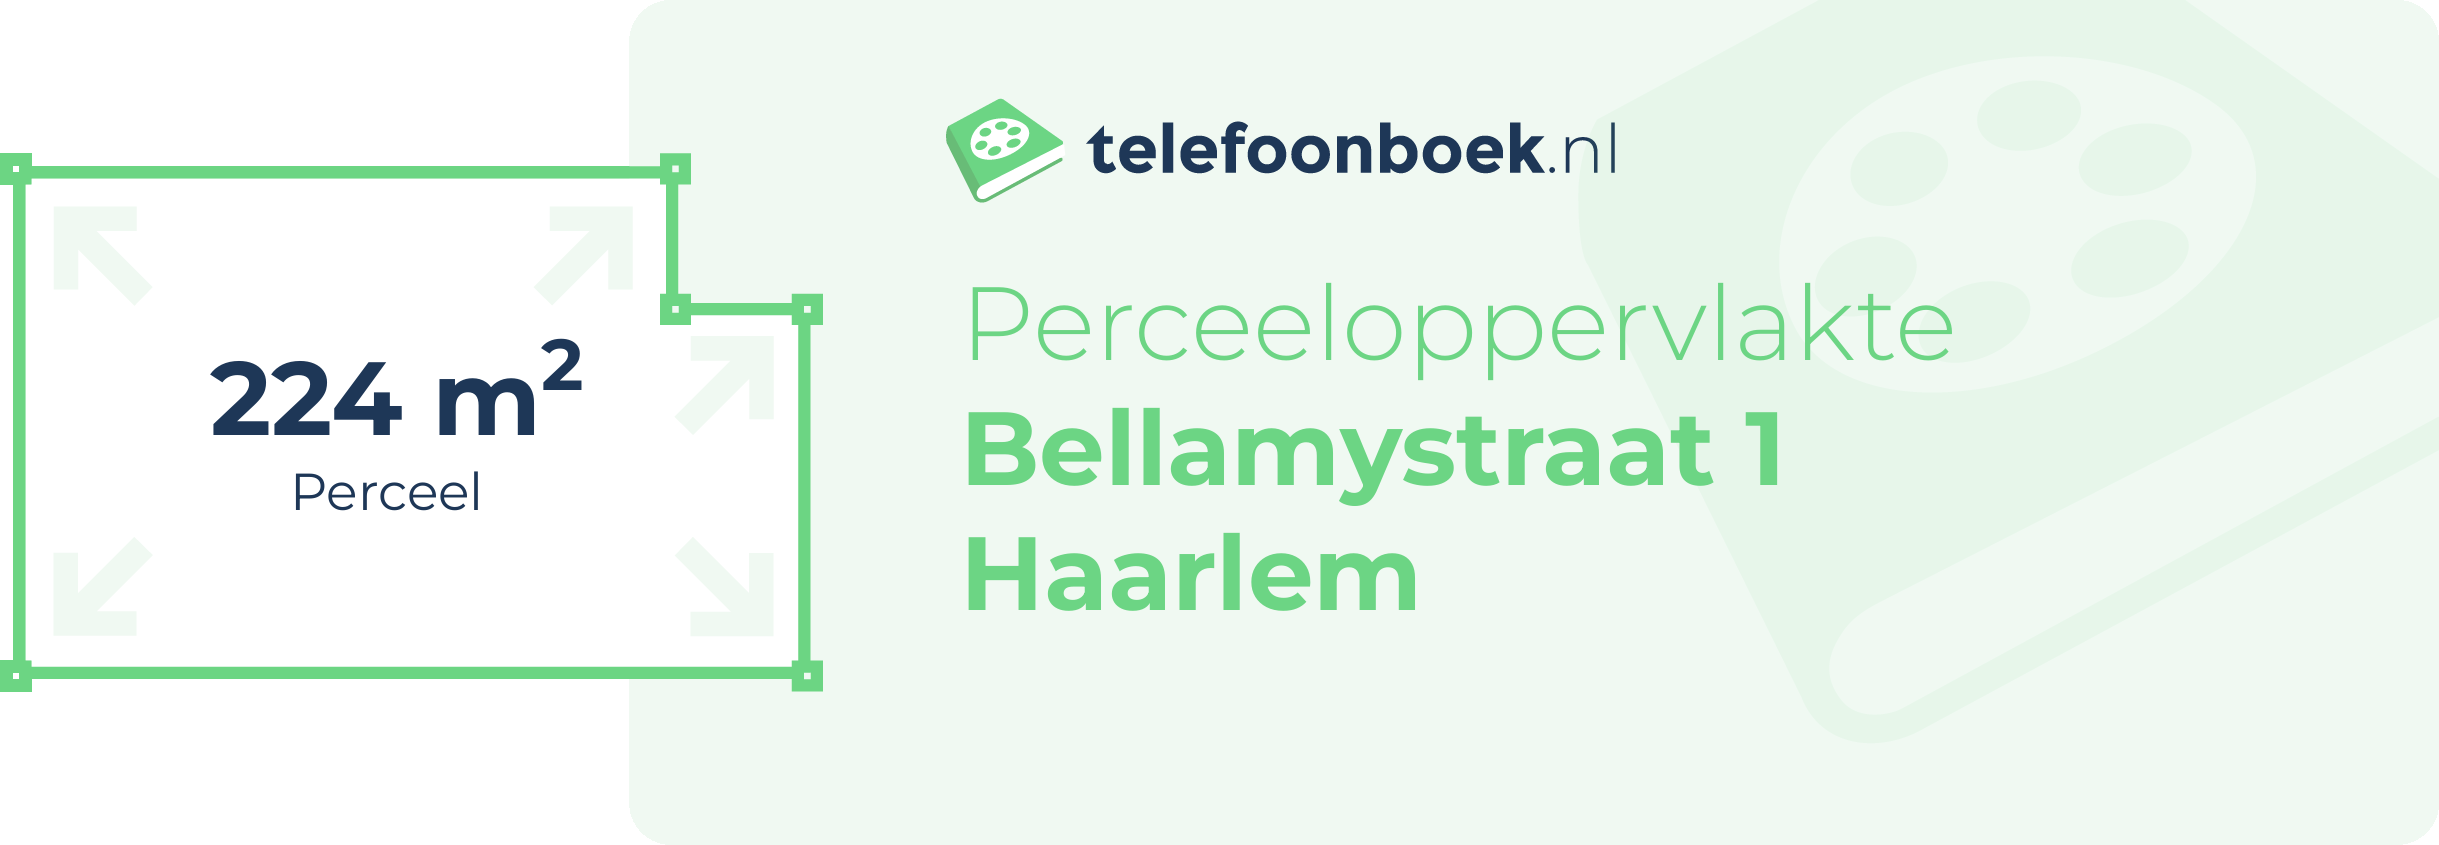 Perceeloppervlakte Bellamystraat 1 Haarlem